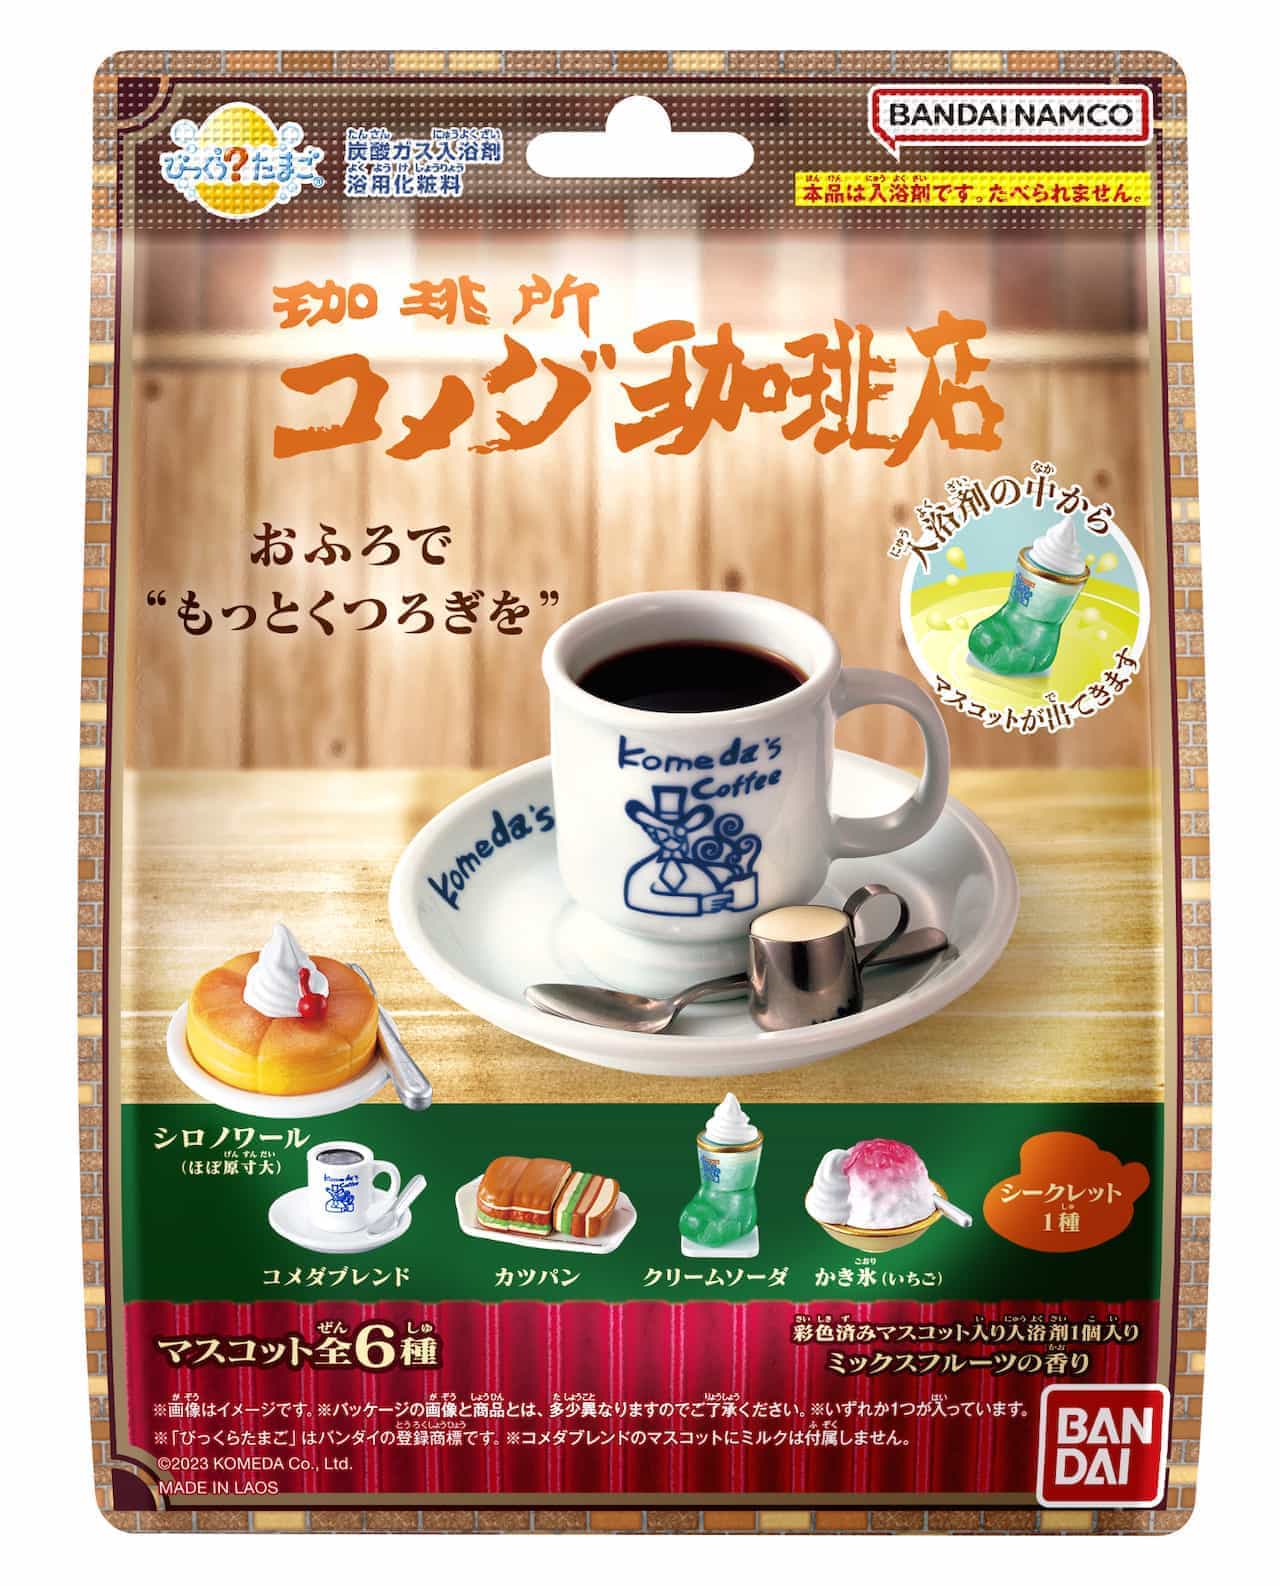 Bath Salts "Bikkuri Tamago Komeda Coffee Shop" lineup of 6 types